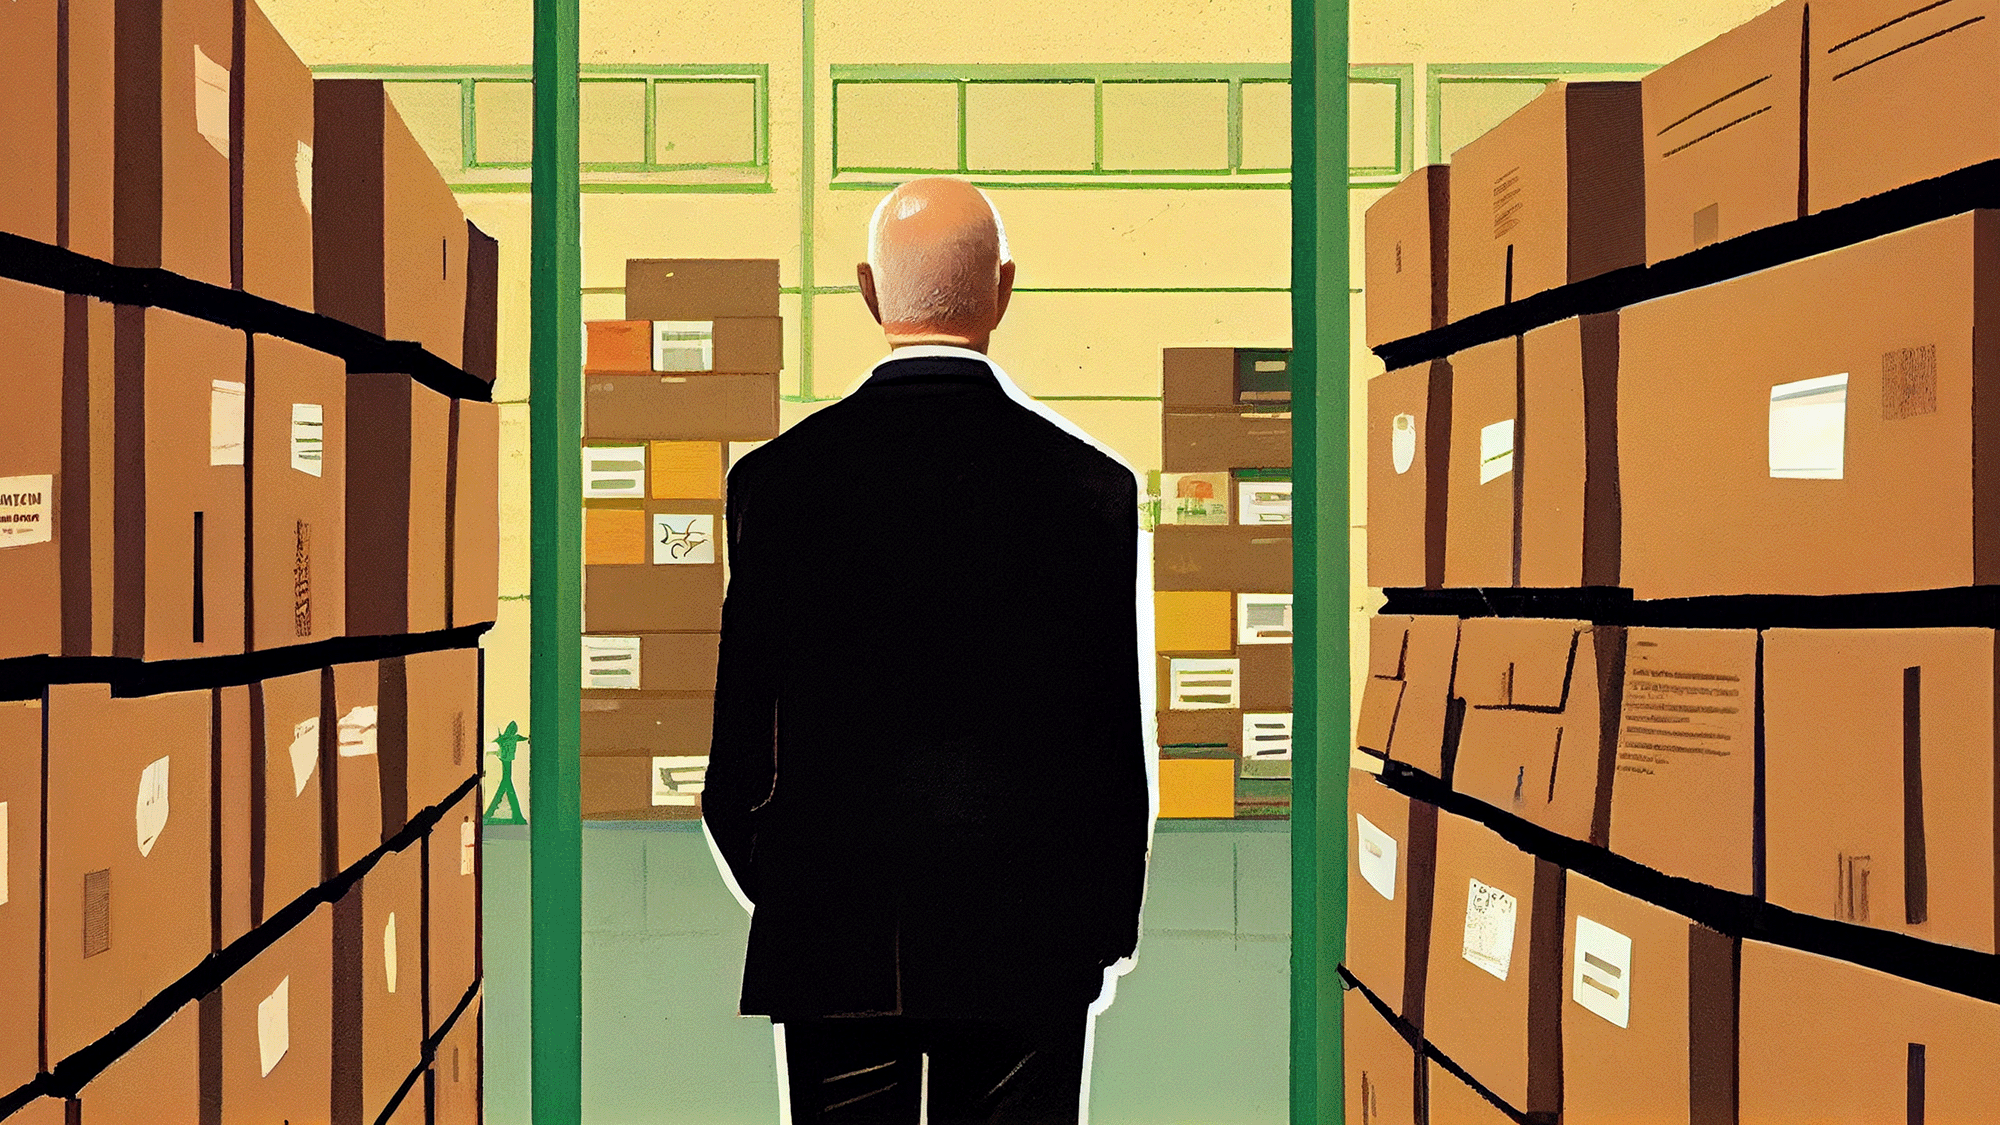 Illustration of Jeff Bezos, Amazon in a warehouse among boxes on shelves.